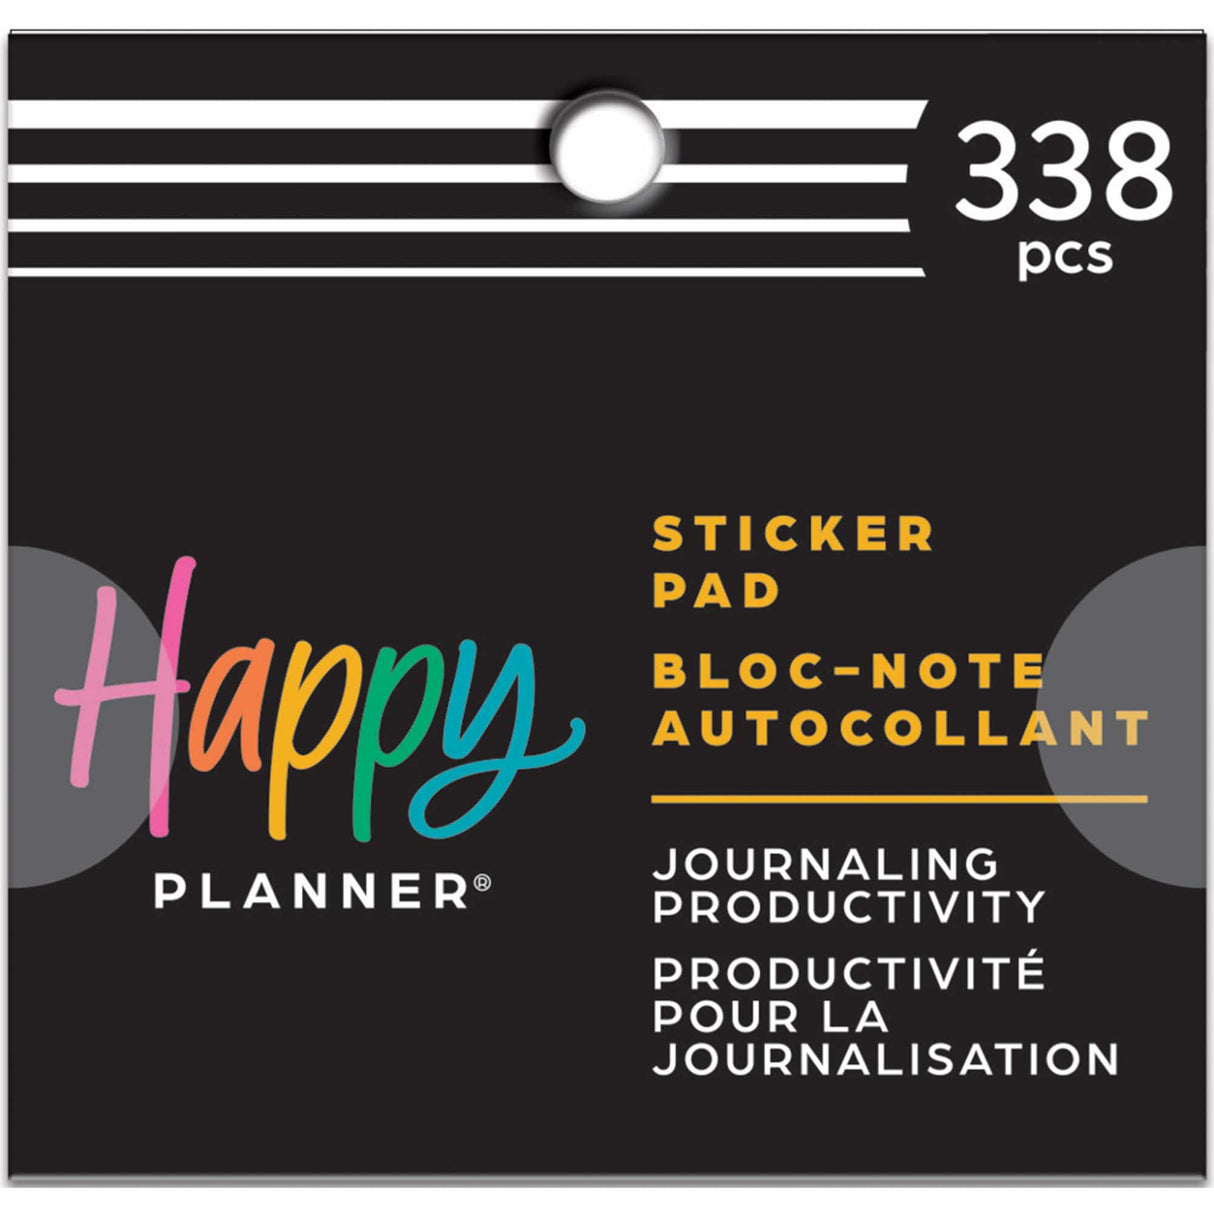 Happy Planner Journaling Productivity Tiny Sticker Pad